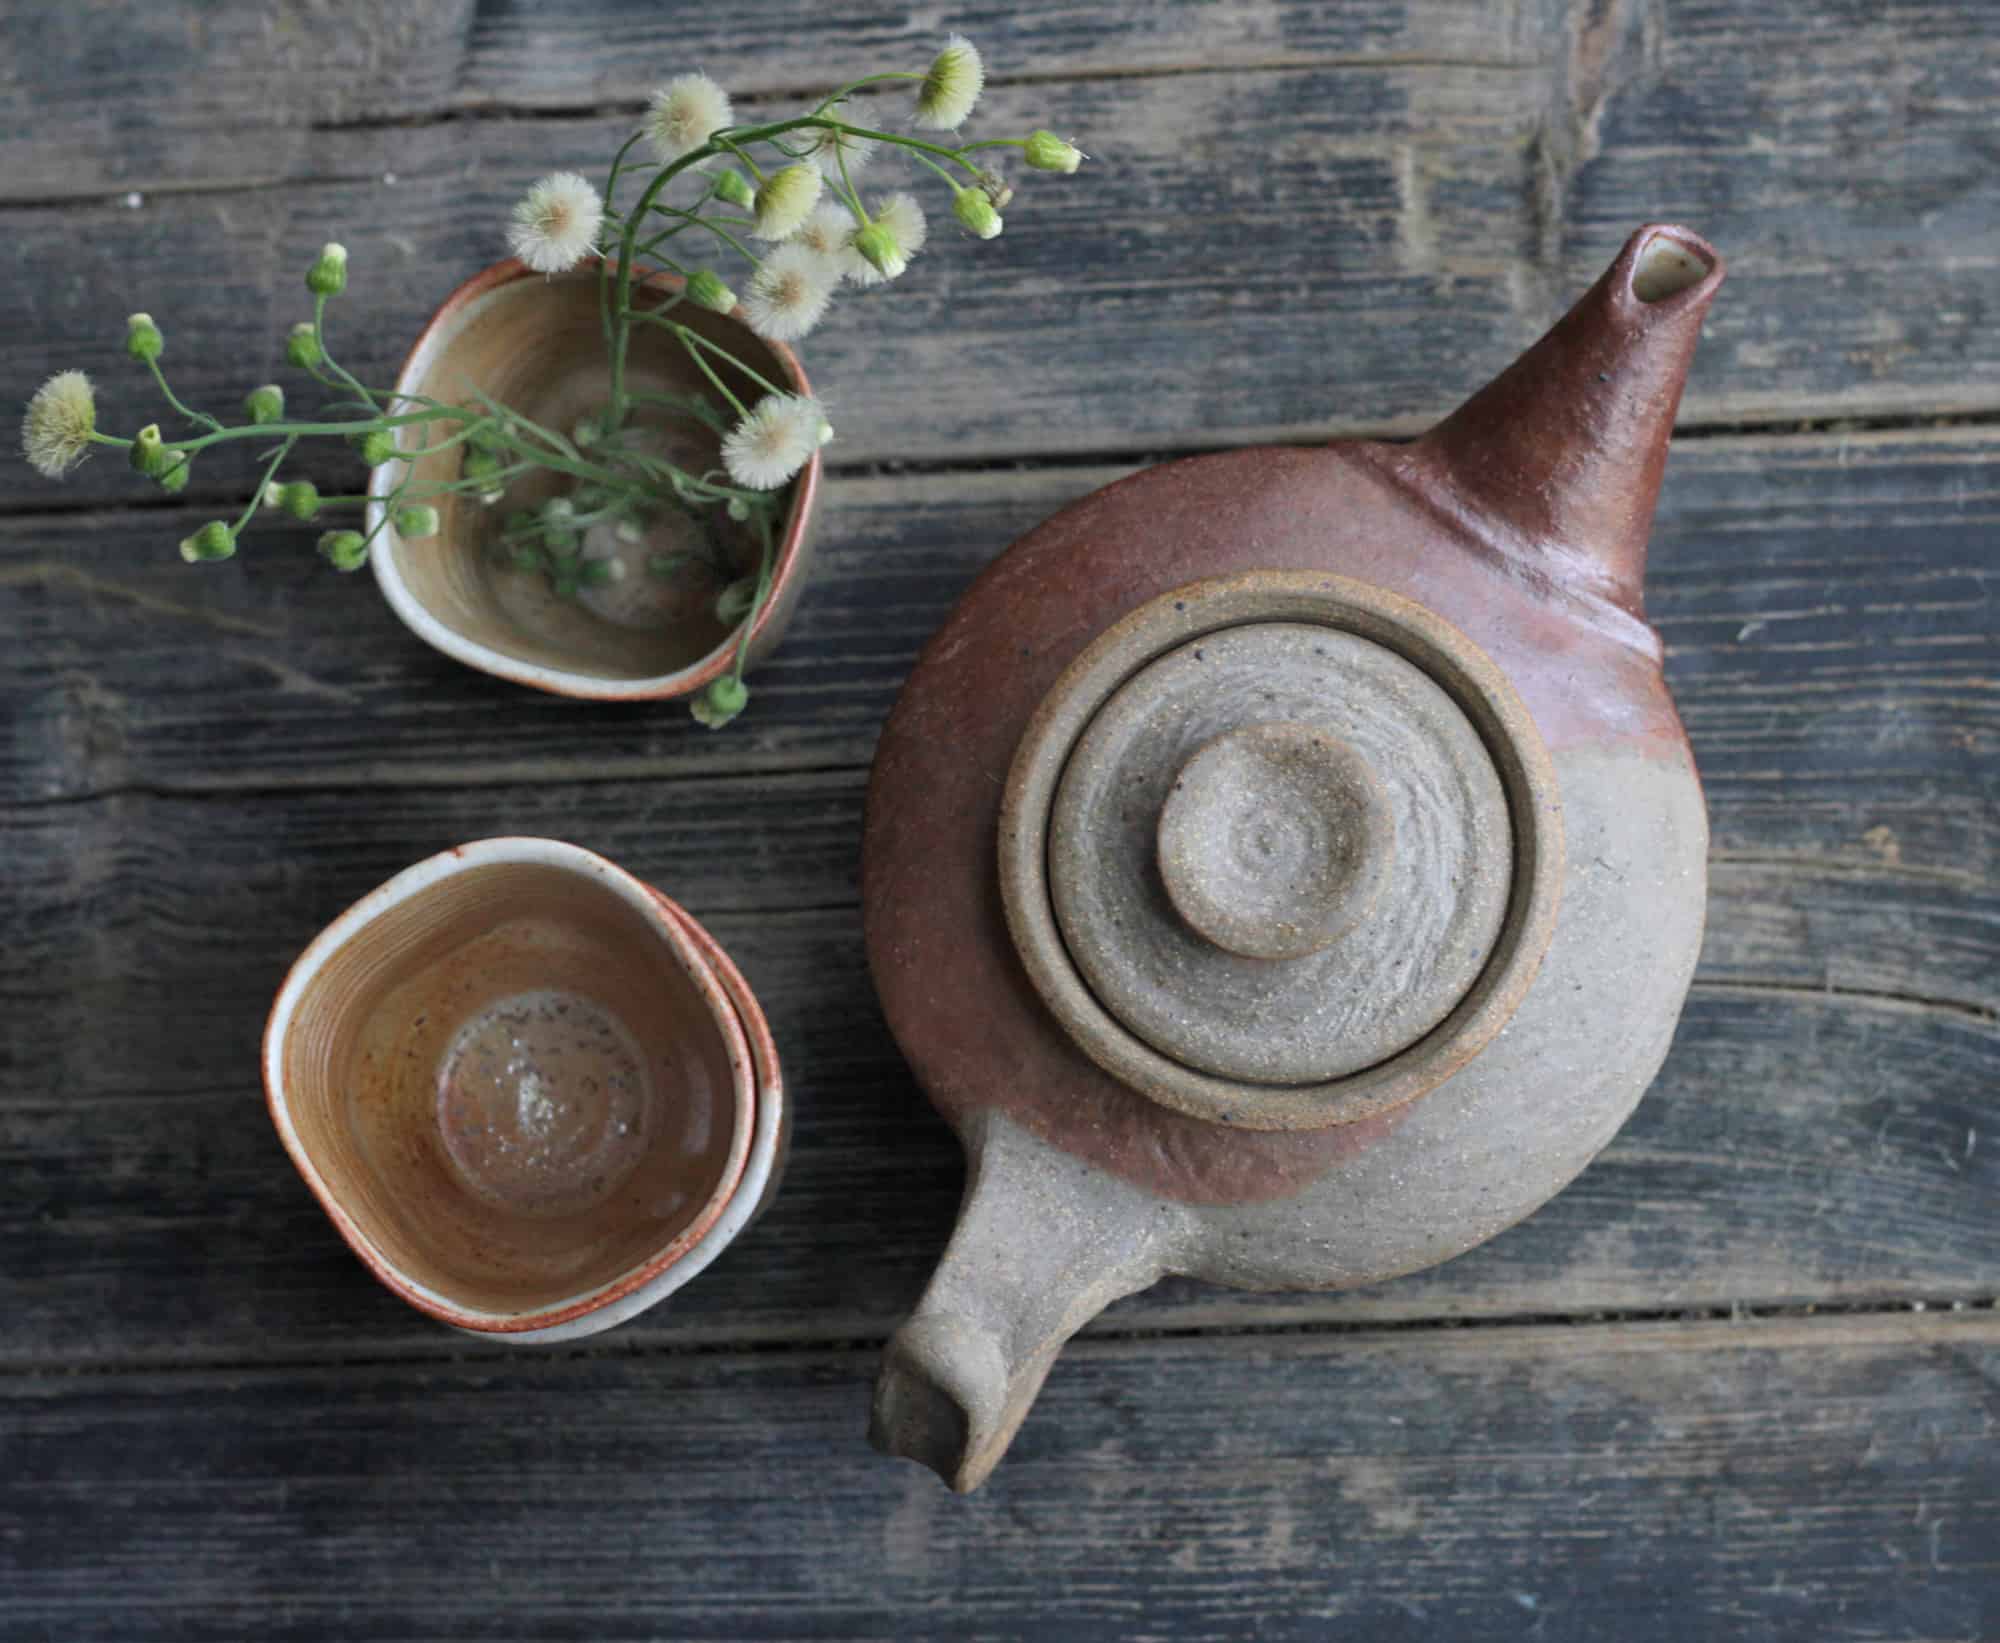 Workshop ceramicsstudio ceramics tea-warmer roastter 70s from brown stoneware brutalist design